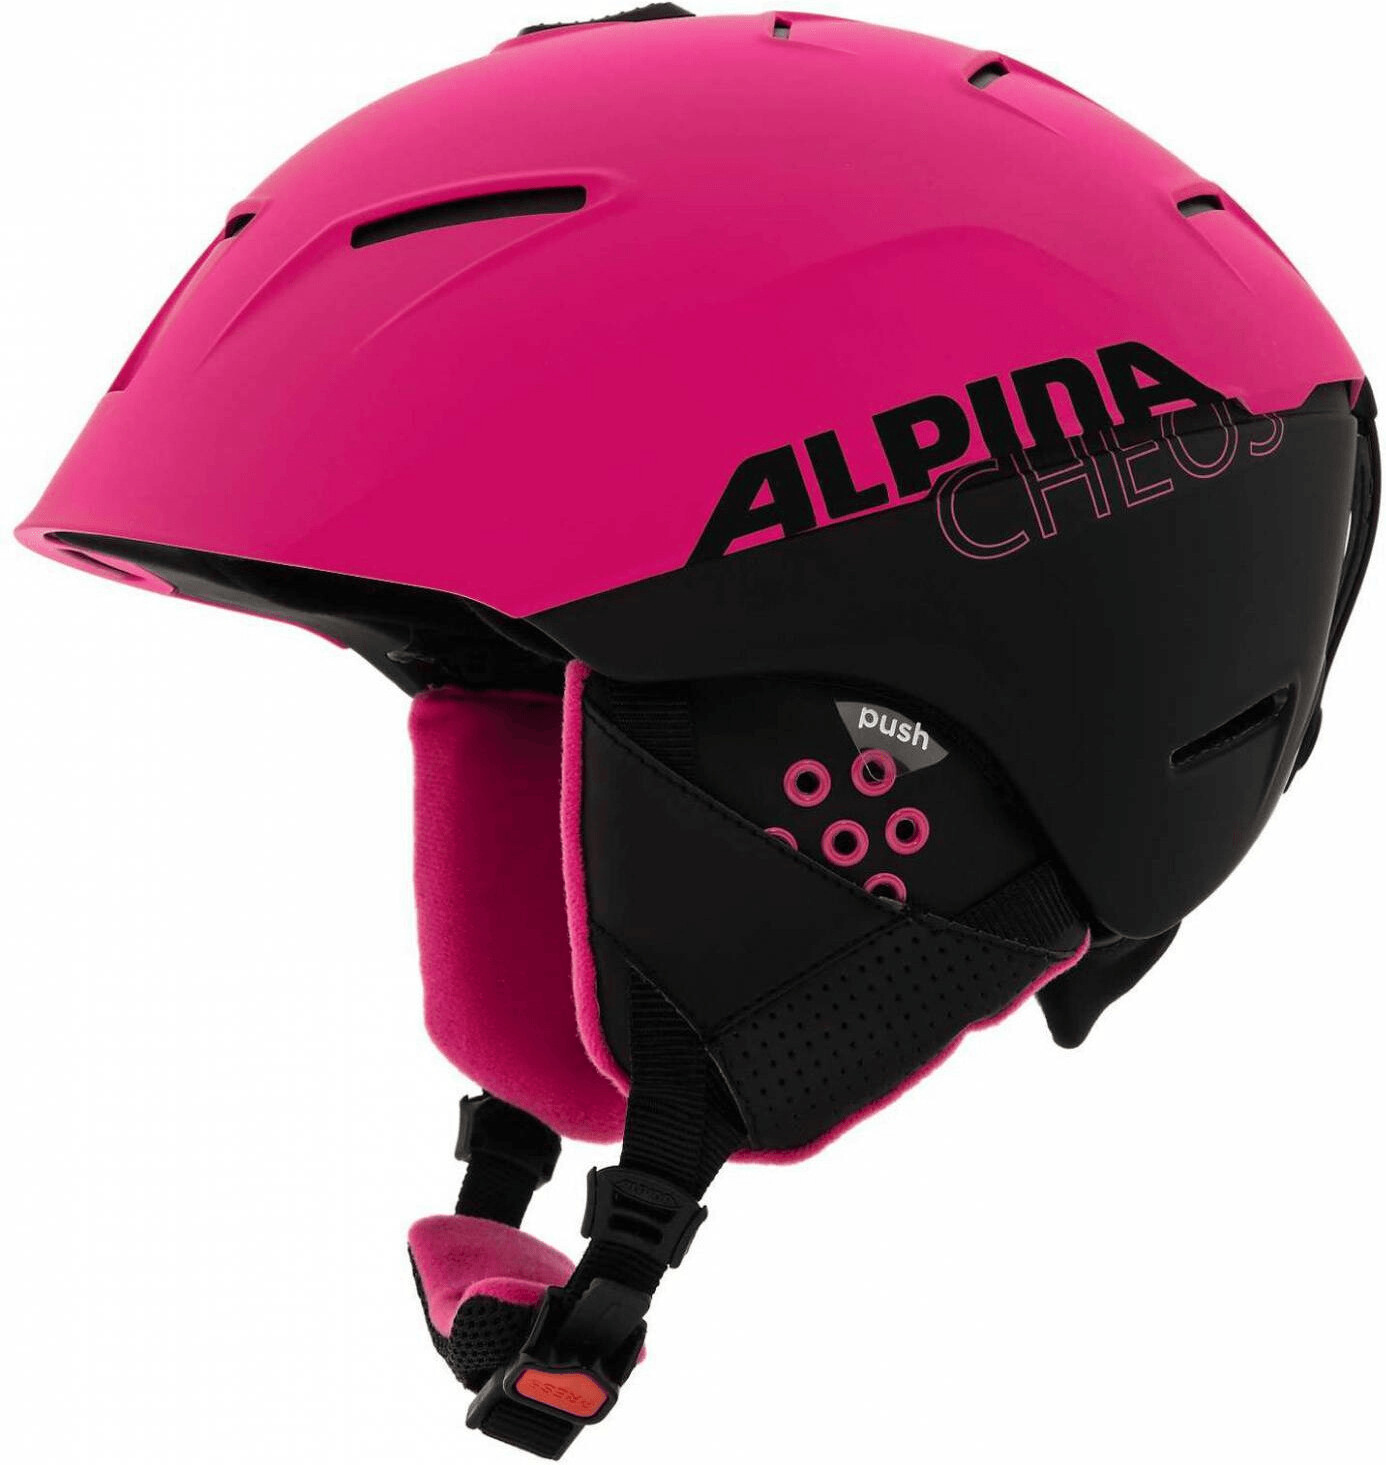 Alpina Sports Cheos pink/black matt